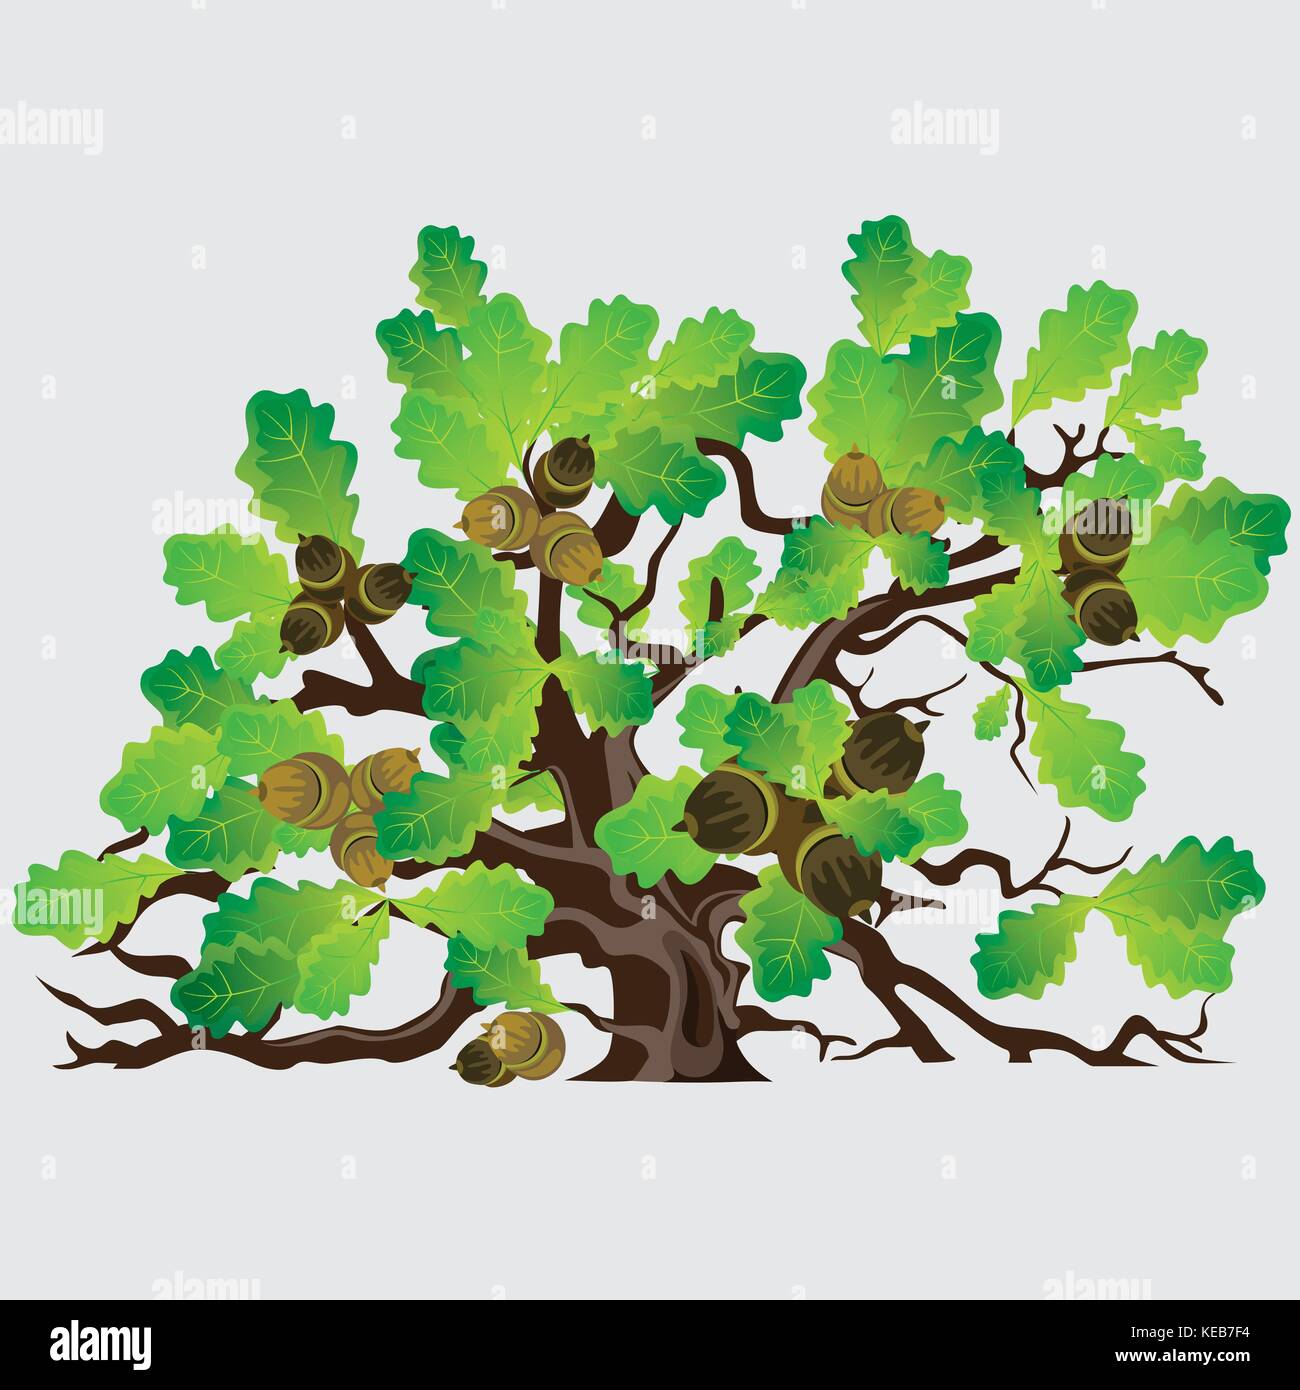 Big green oak tree with acorns vector illustration Stock Vector